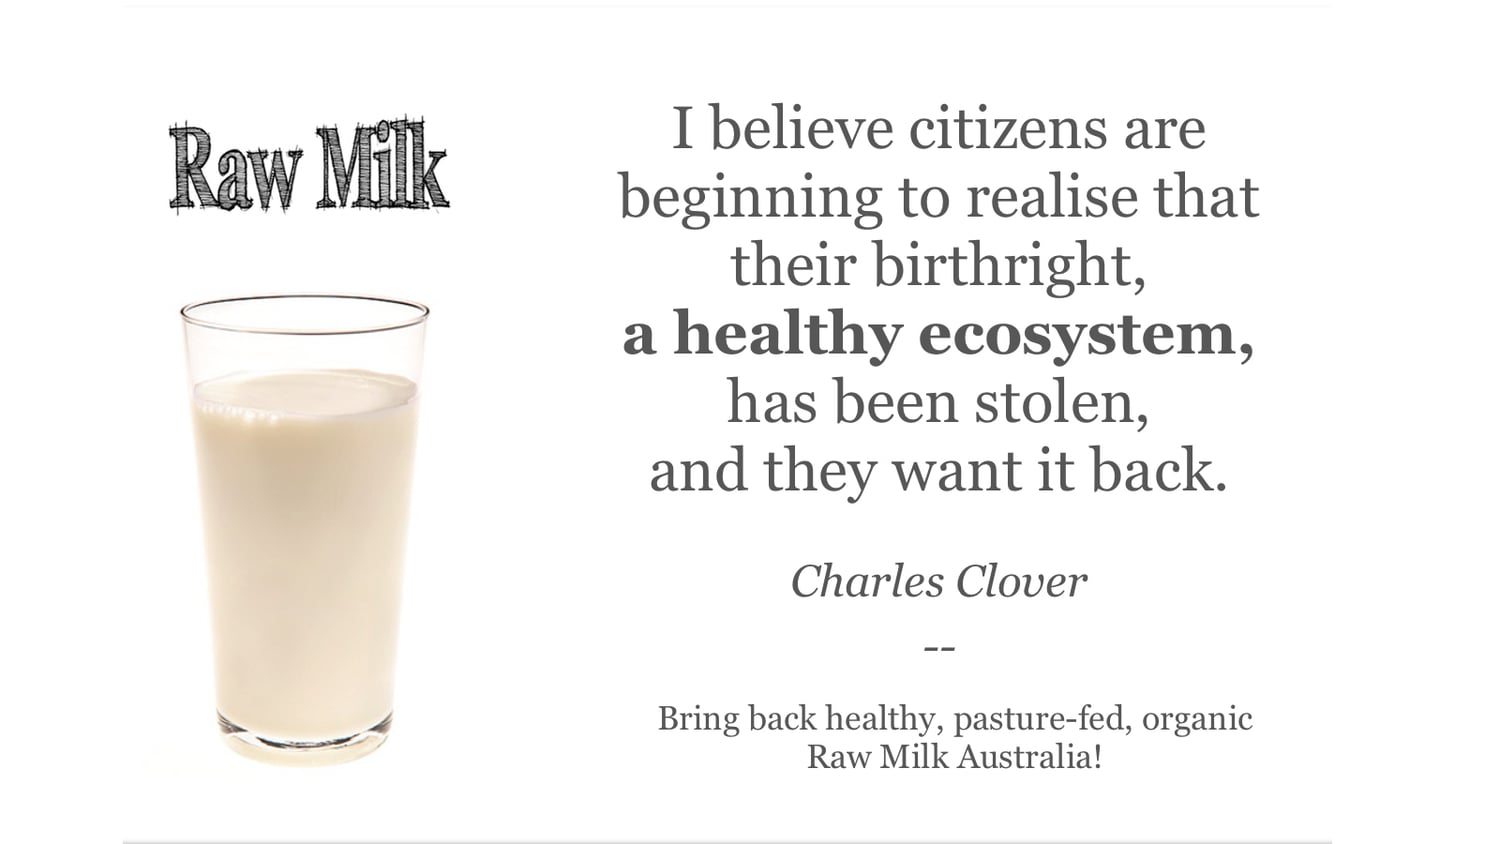 Gallery — Australian Raw Milk Movement